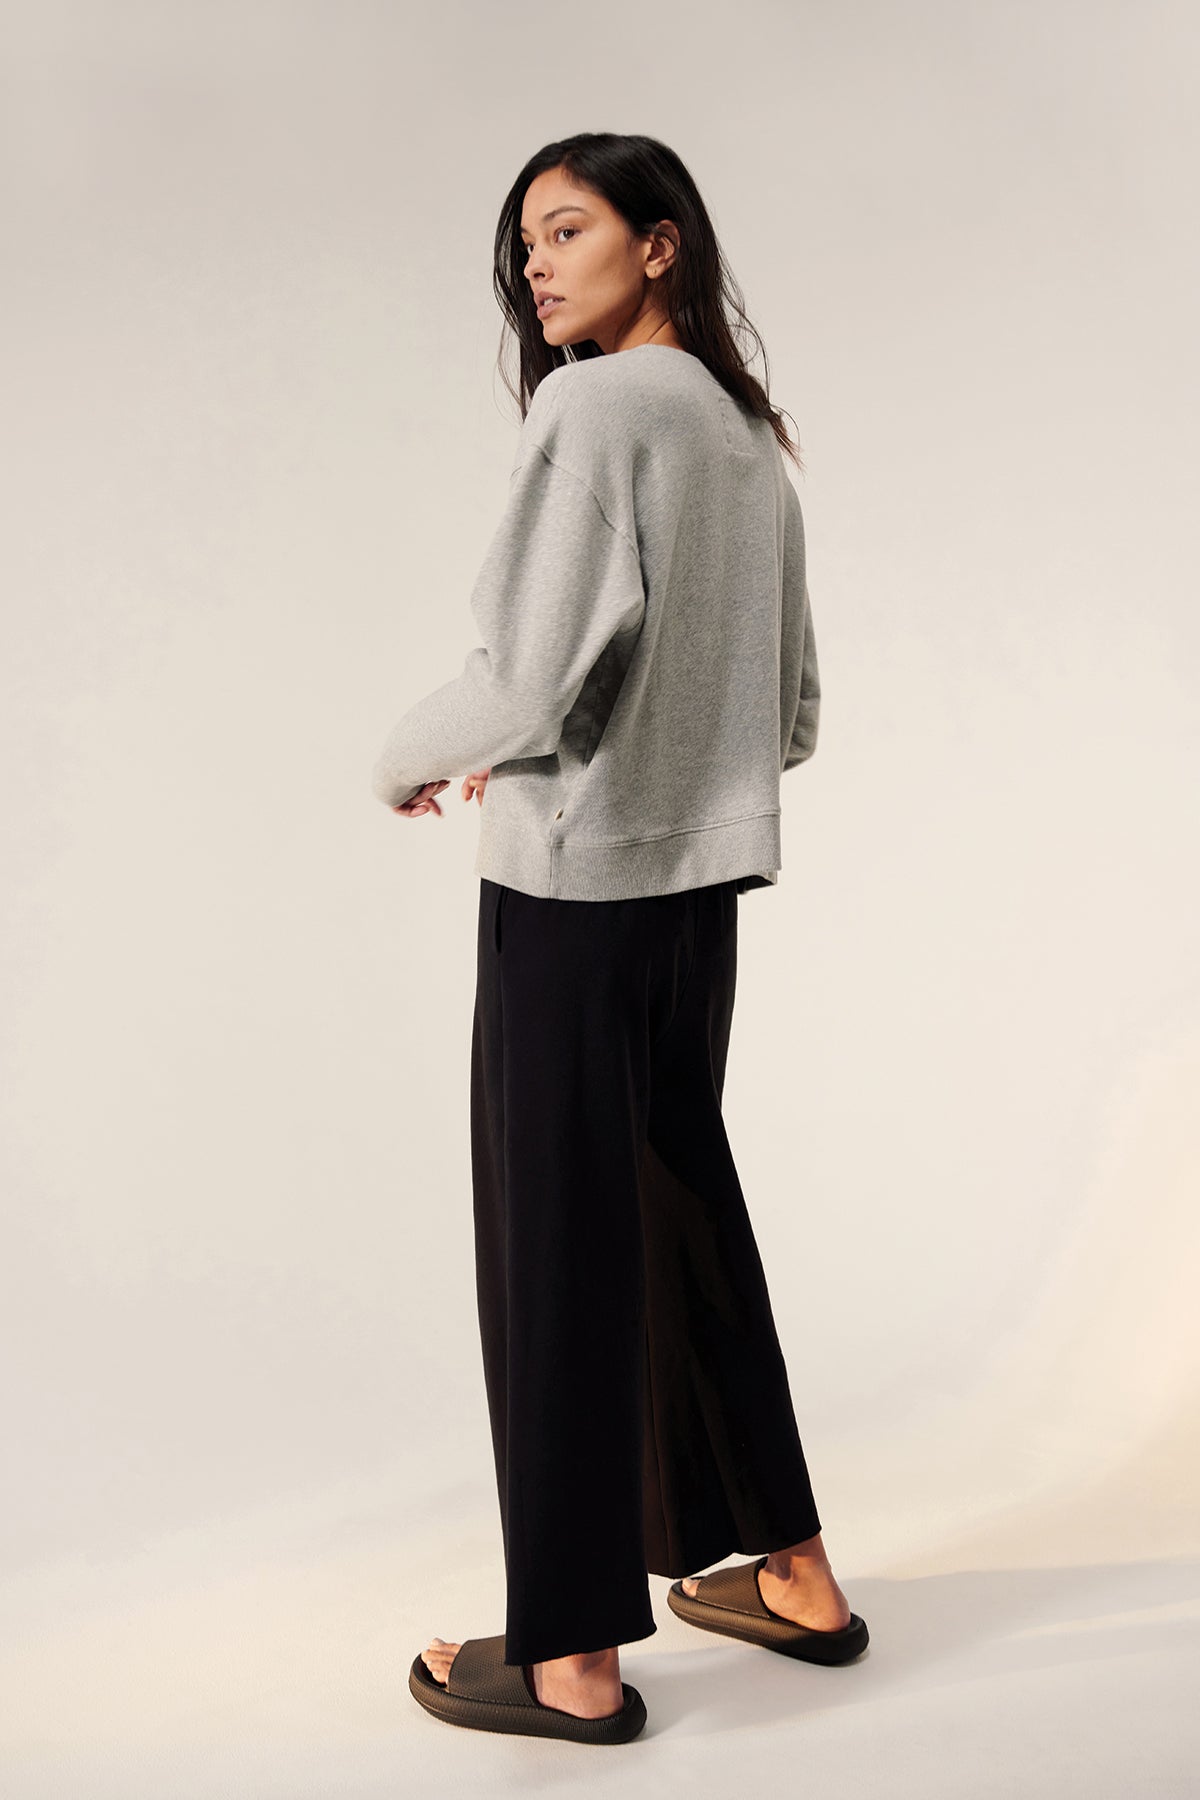 ynez sweatshirt heather grey back with montecito pant black-22853908758721